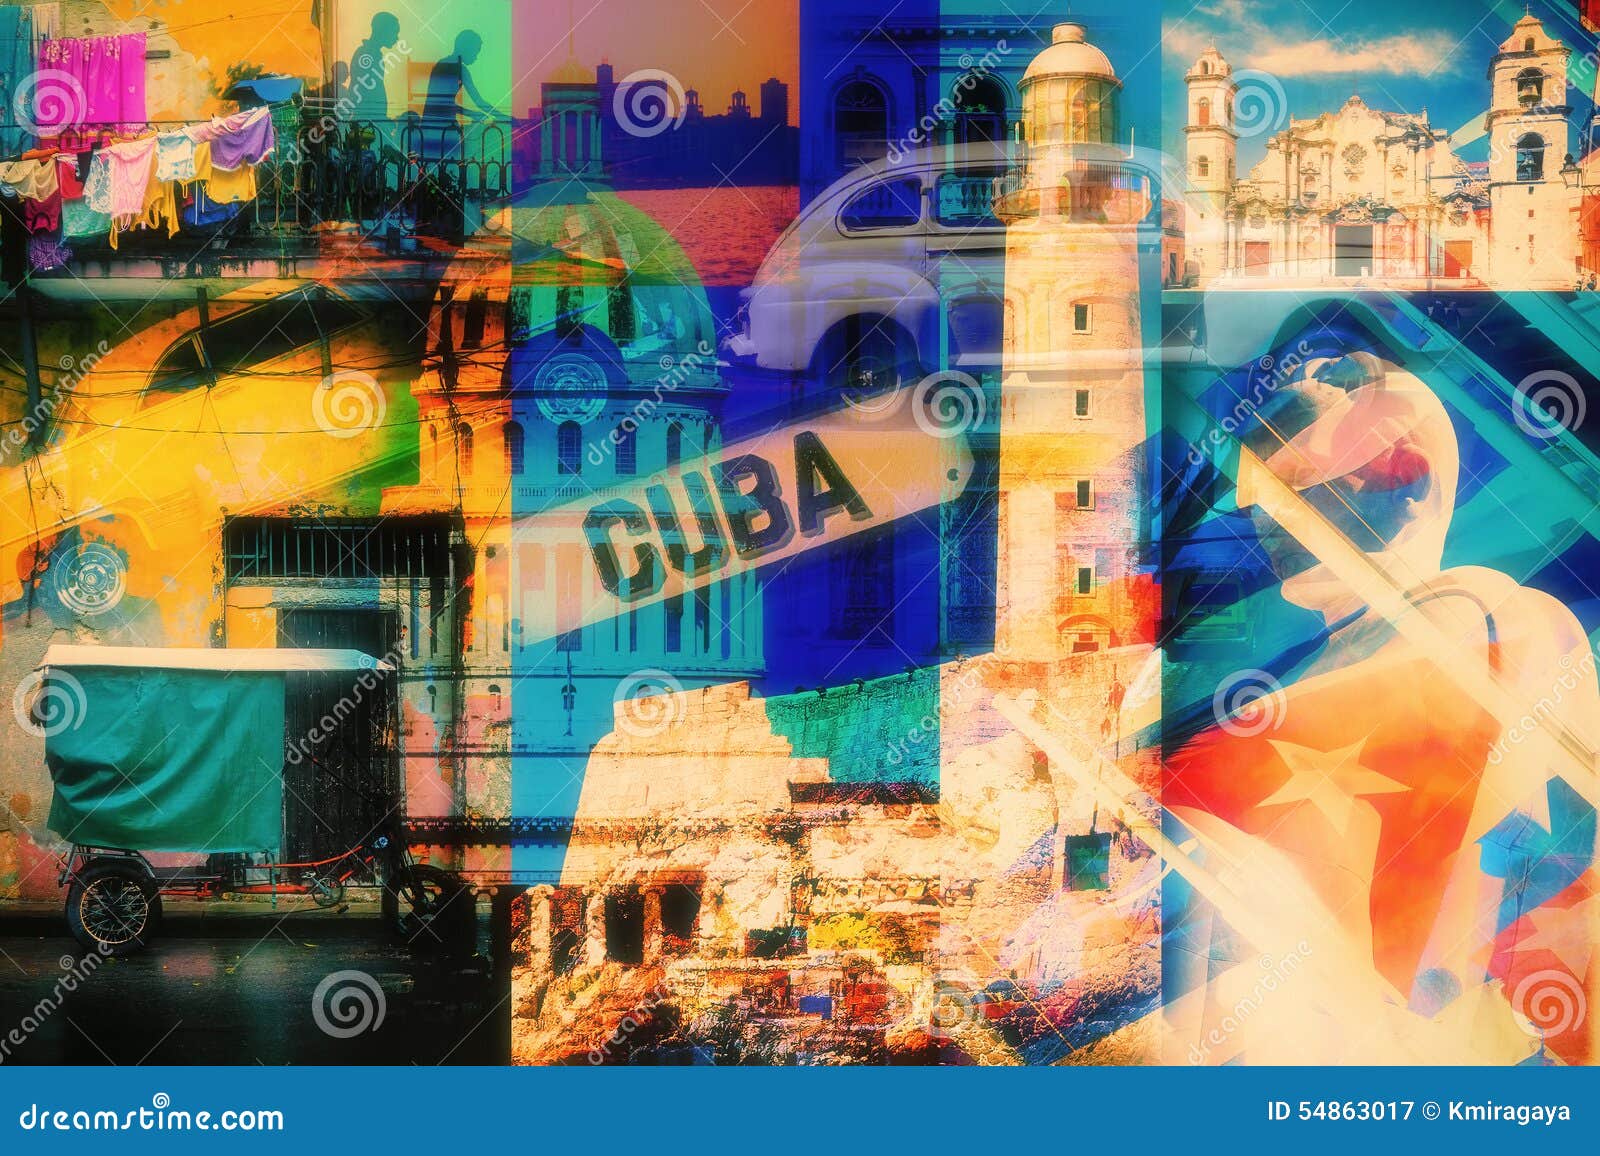 collage of havana cuba images